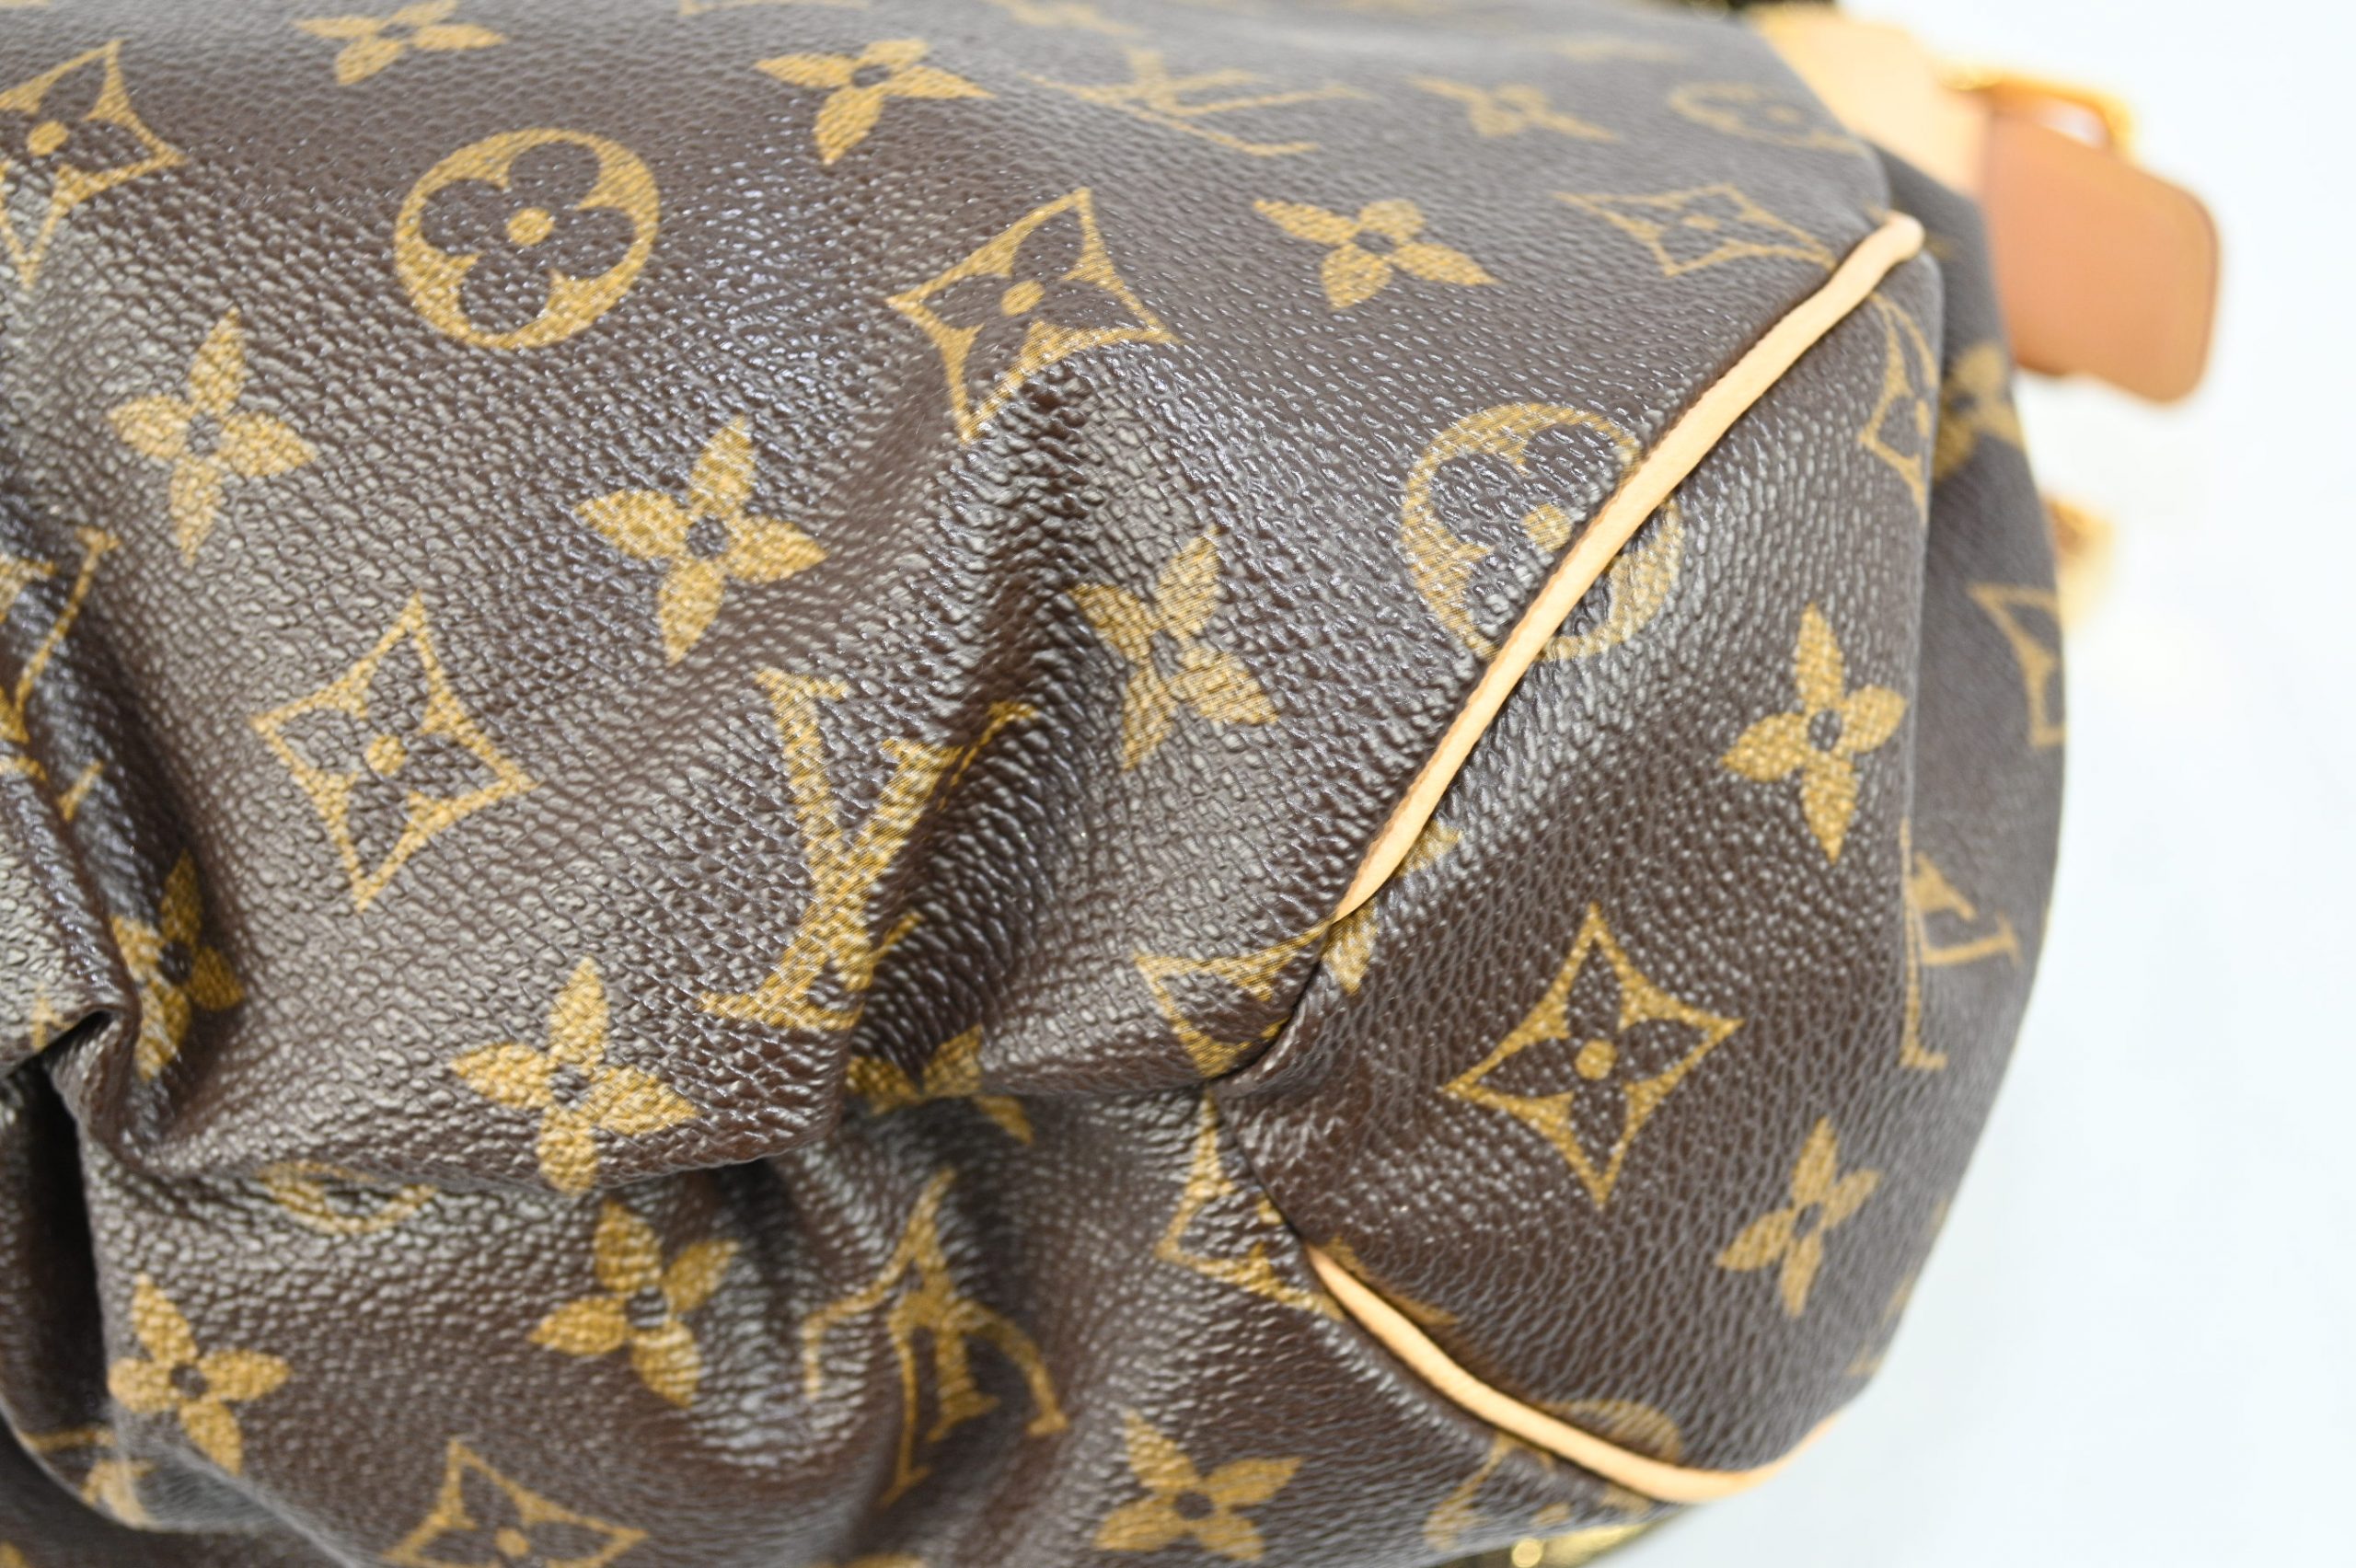 Kalahari Madonna Louis Vuitton Bag limited edition, Luxury, Bags & Wallets  on Carousell